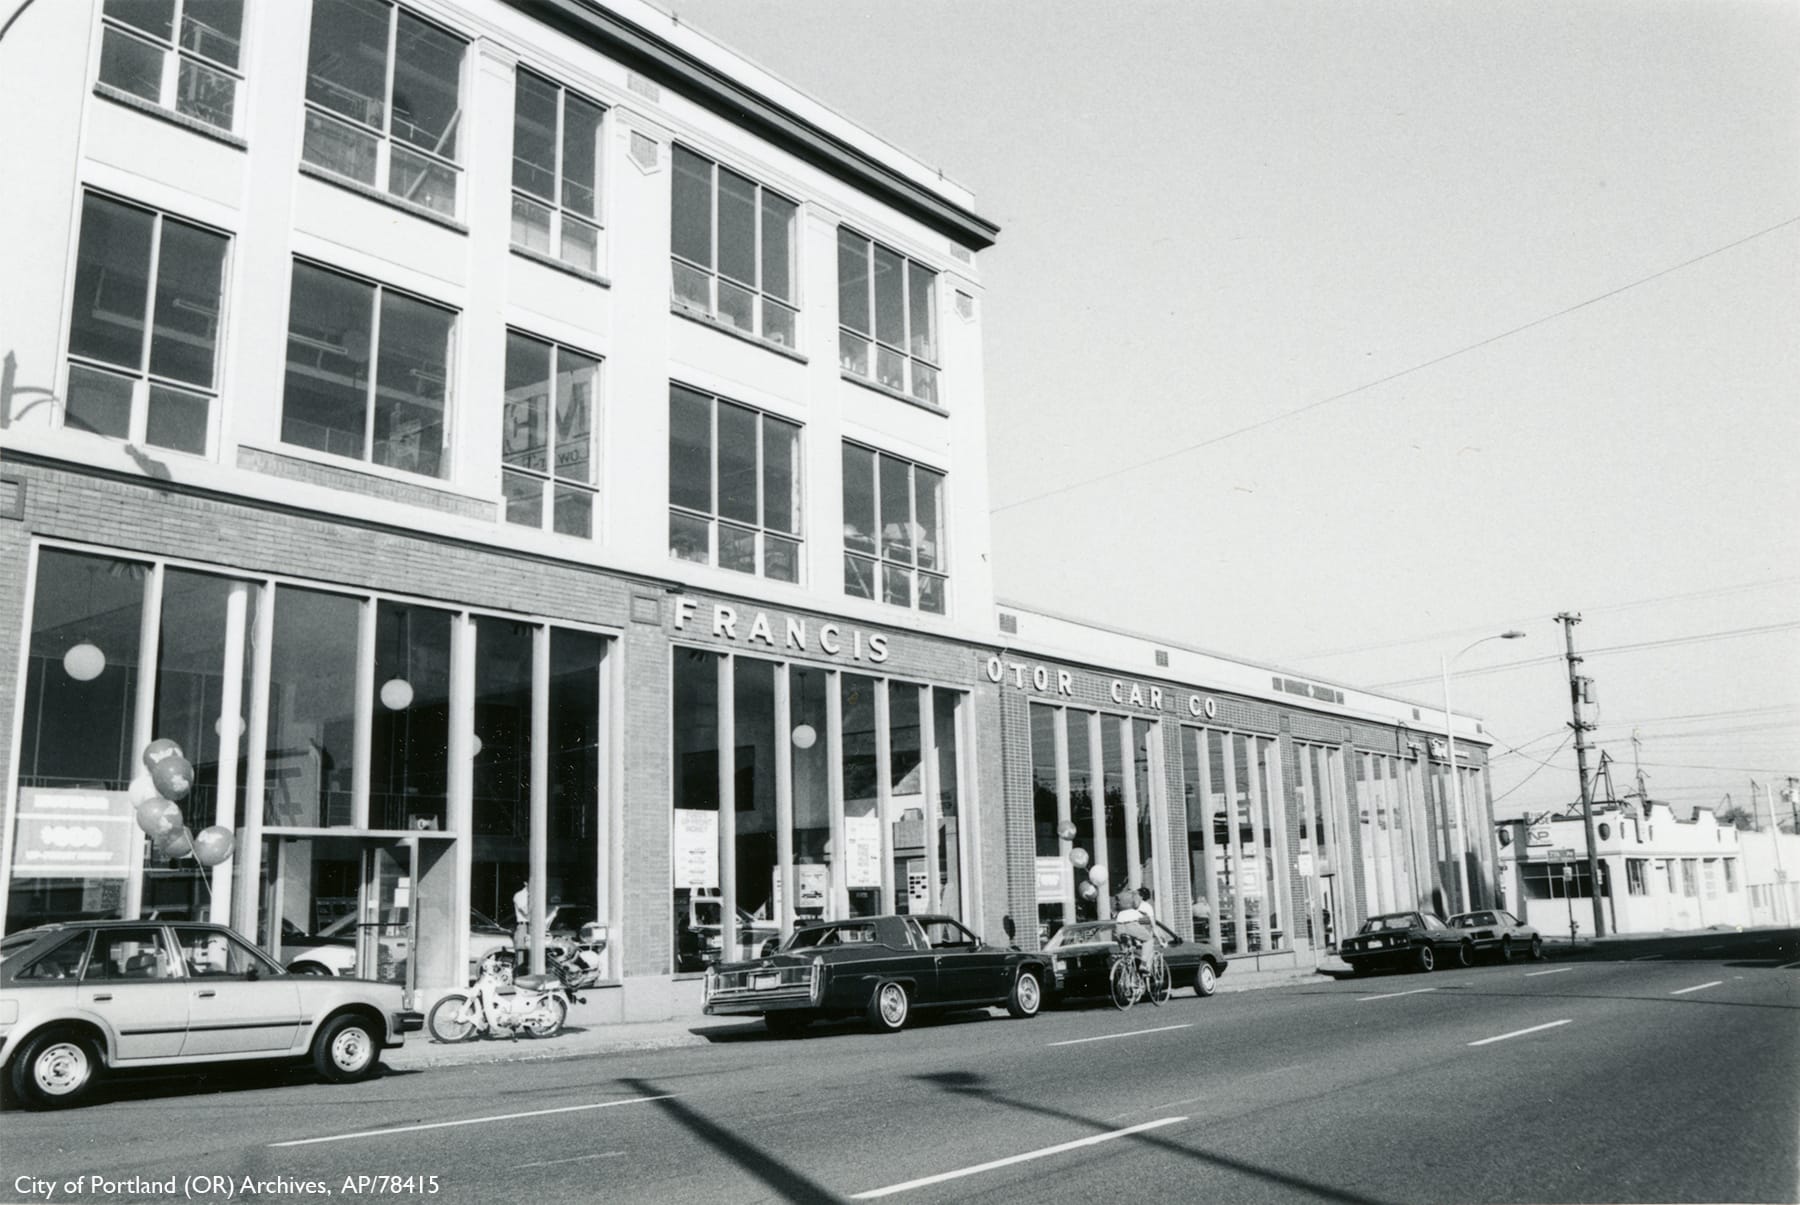 Francis Motor Car Co. / Multnomah County Building, Portland